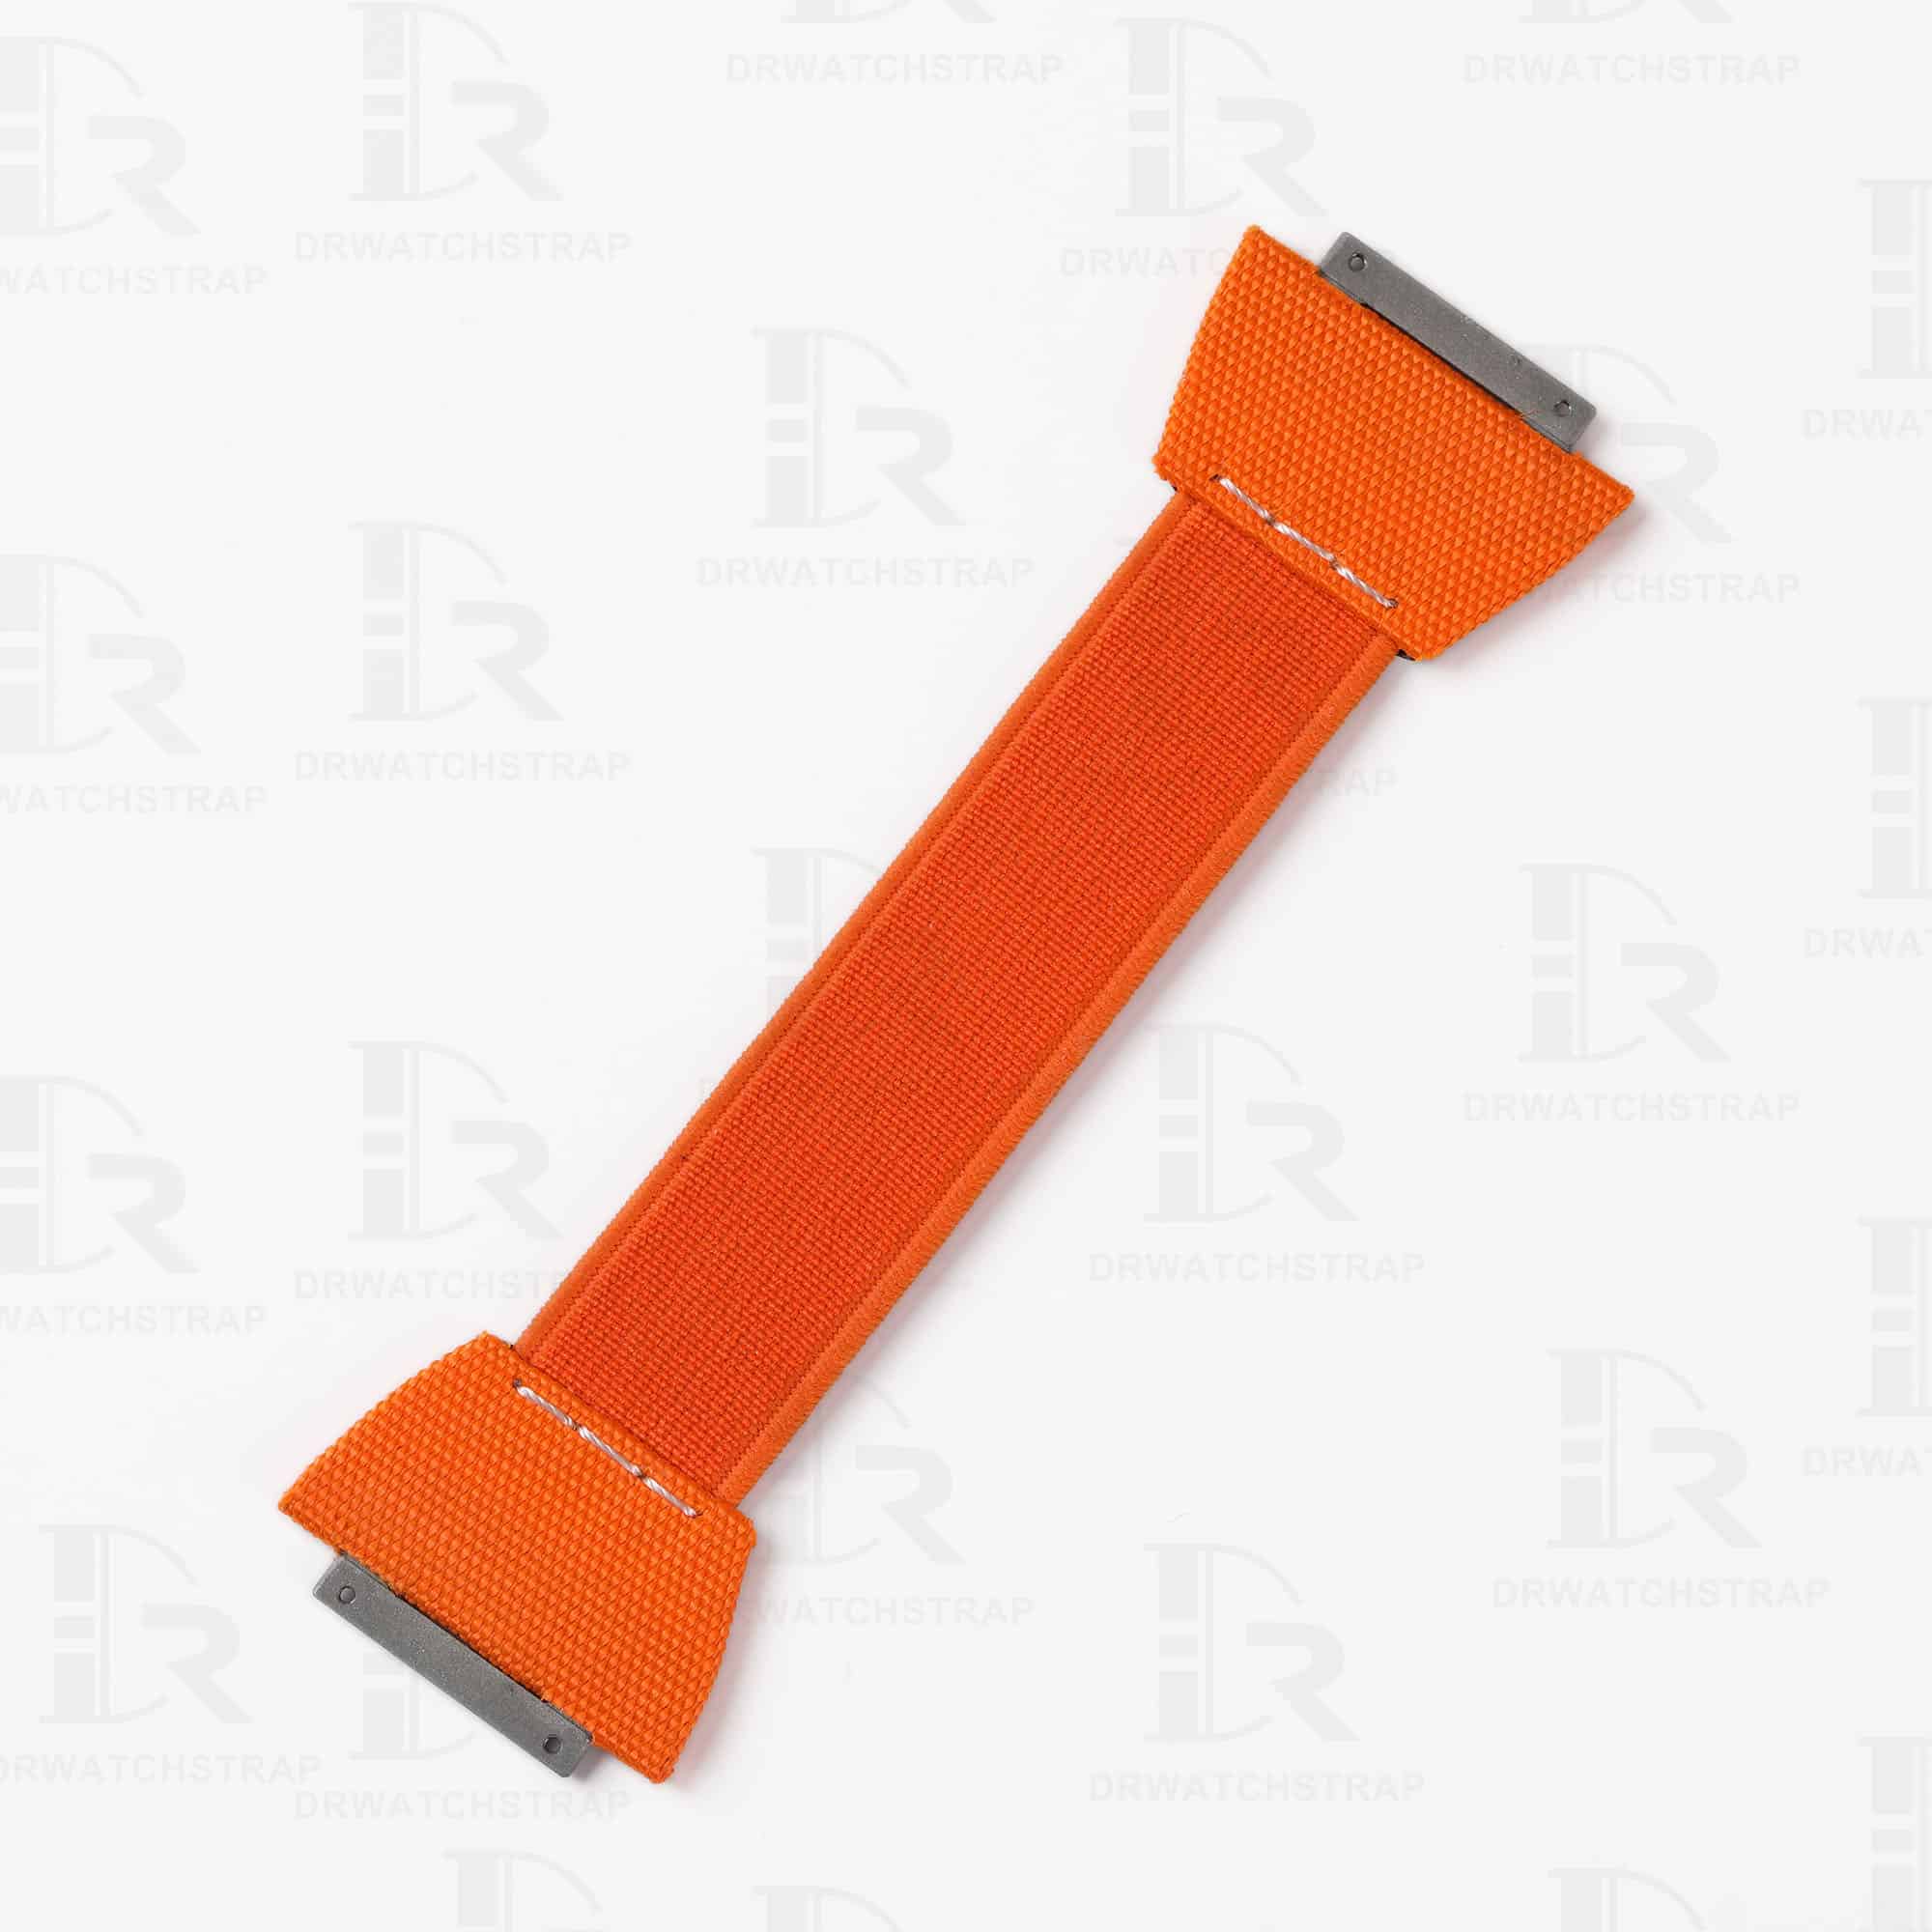 Custom Richard Mille elastic strap Orange Nylon watch band fit RM016 canvas strap